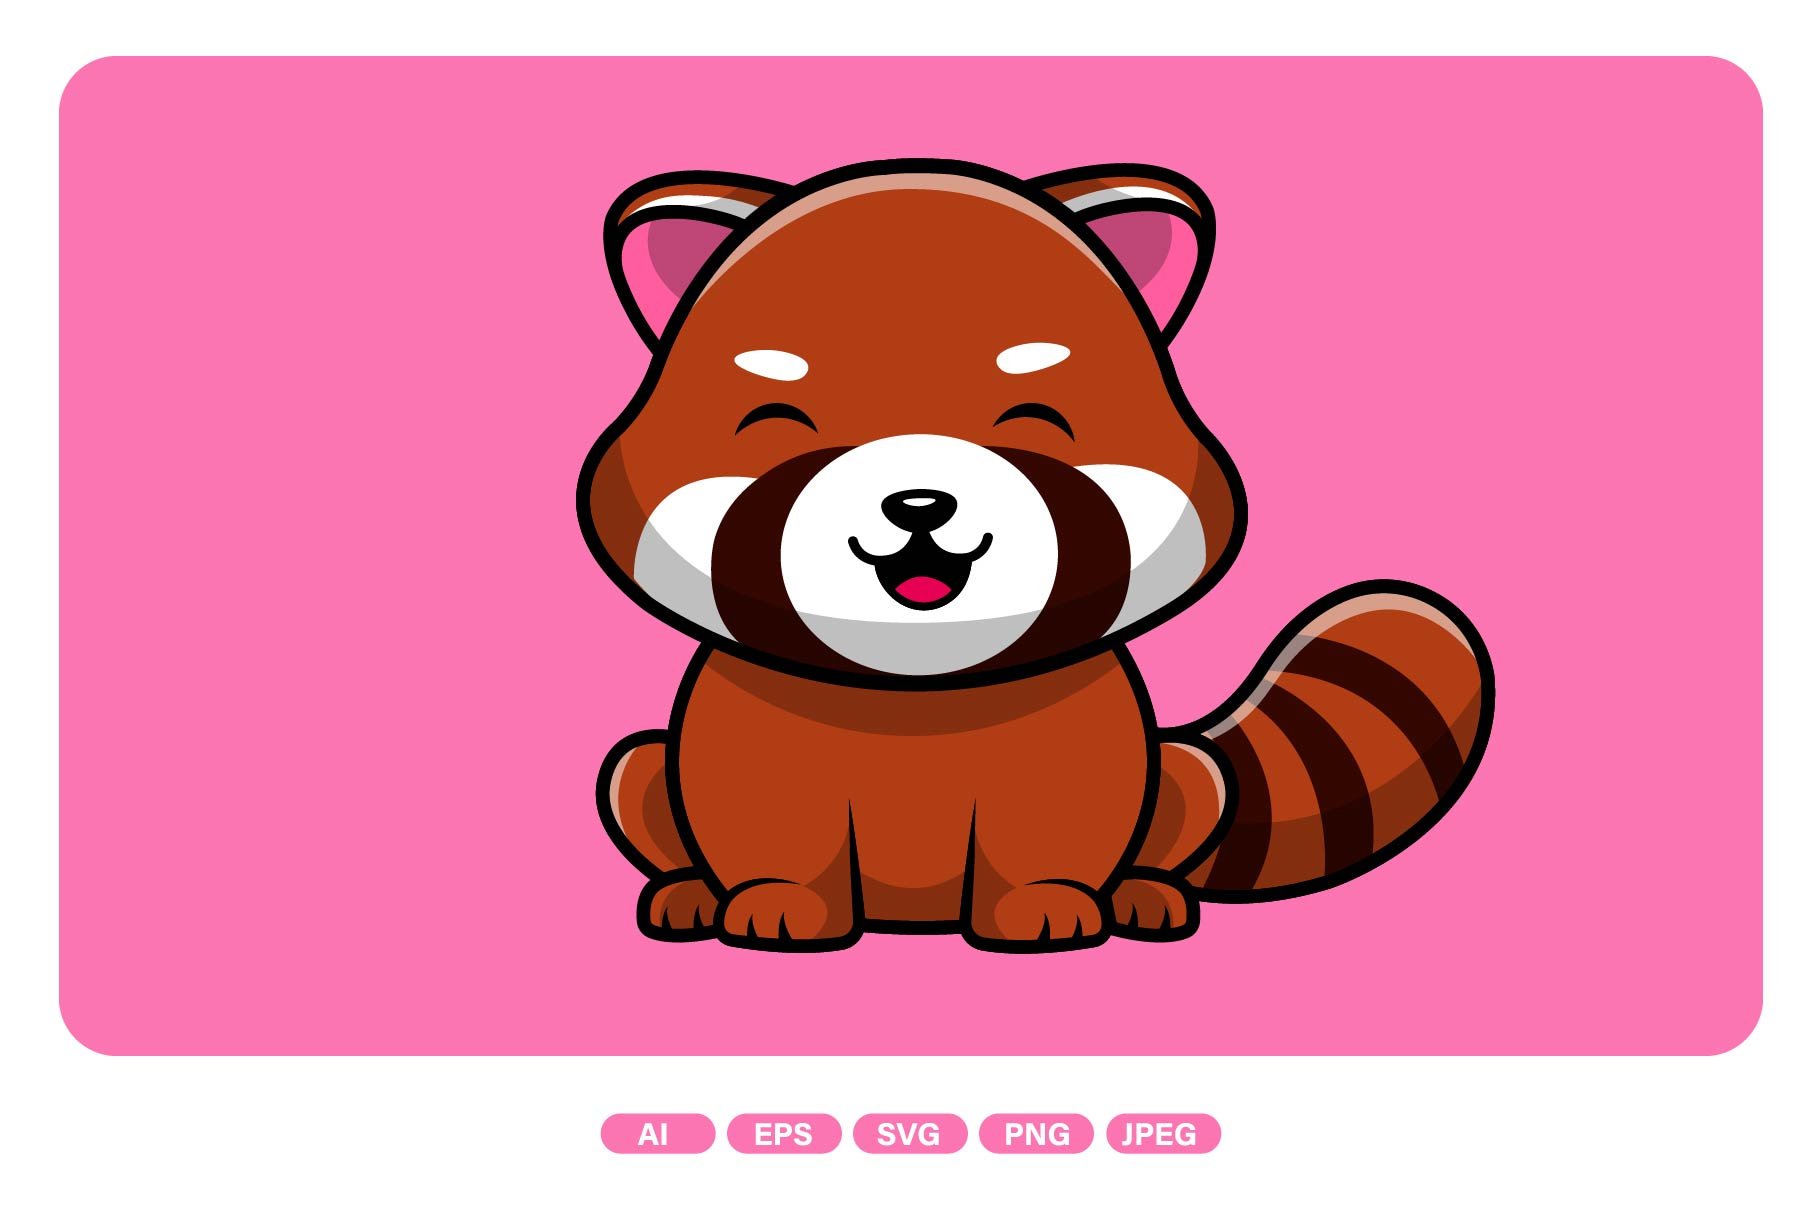 Cute Red Panda Sitting cover image.